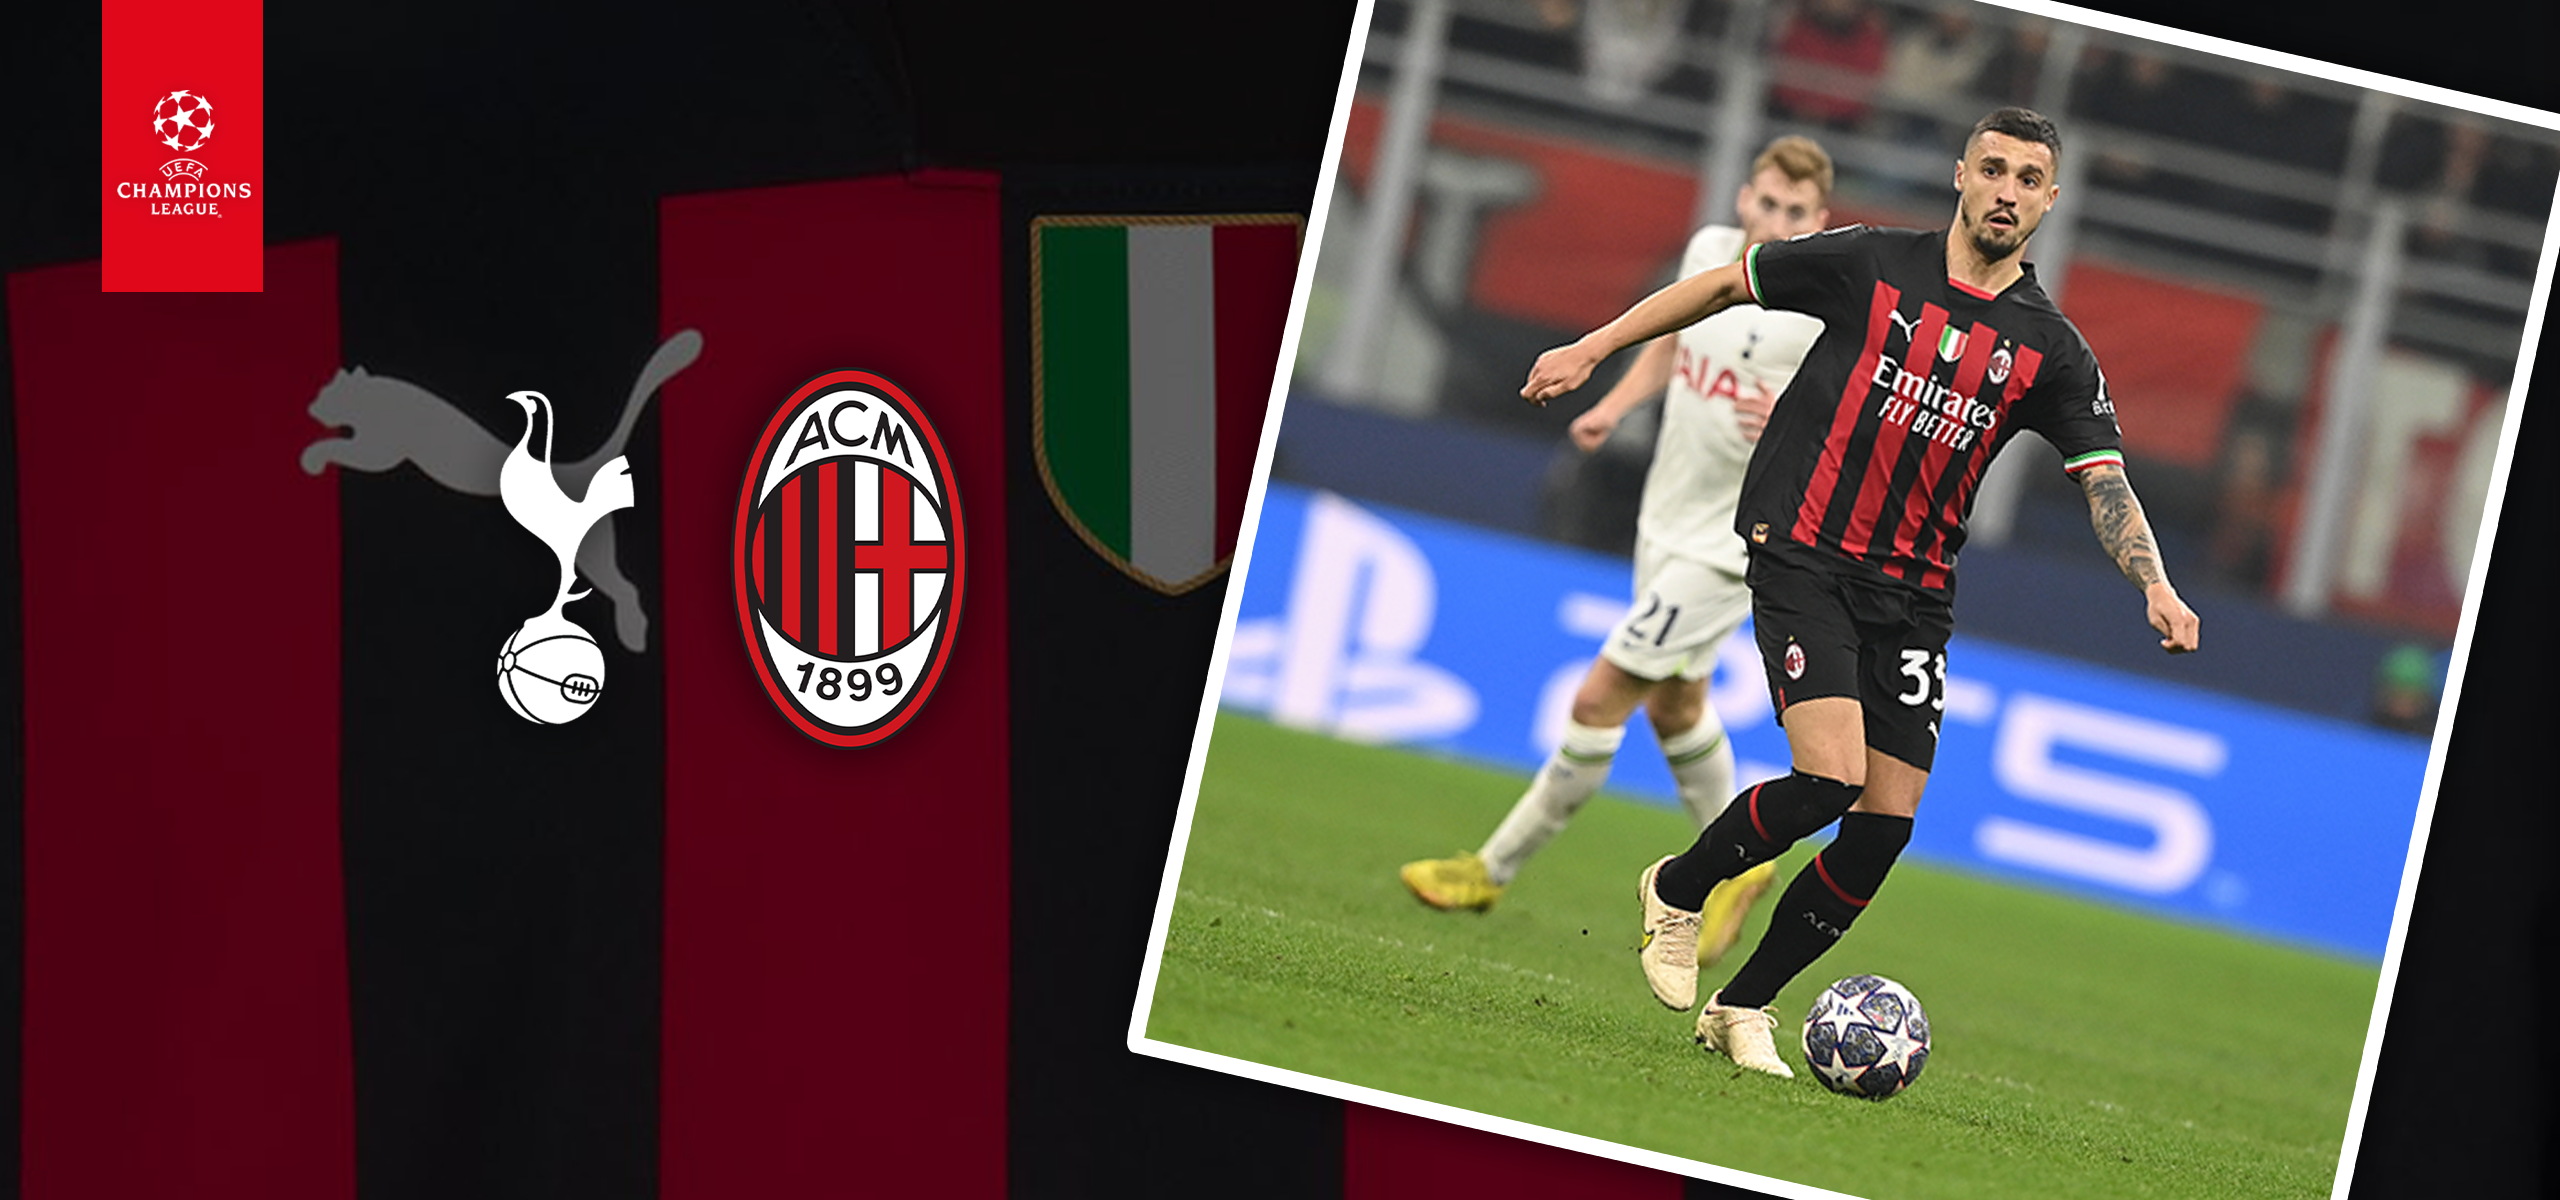 AC Milan 1-0 Tottenham, UEFA Champions League 2022/2023: the match